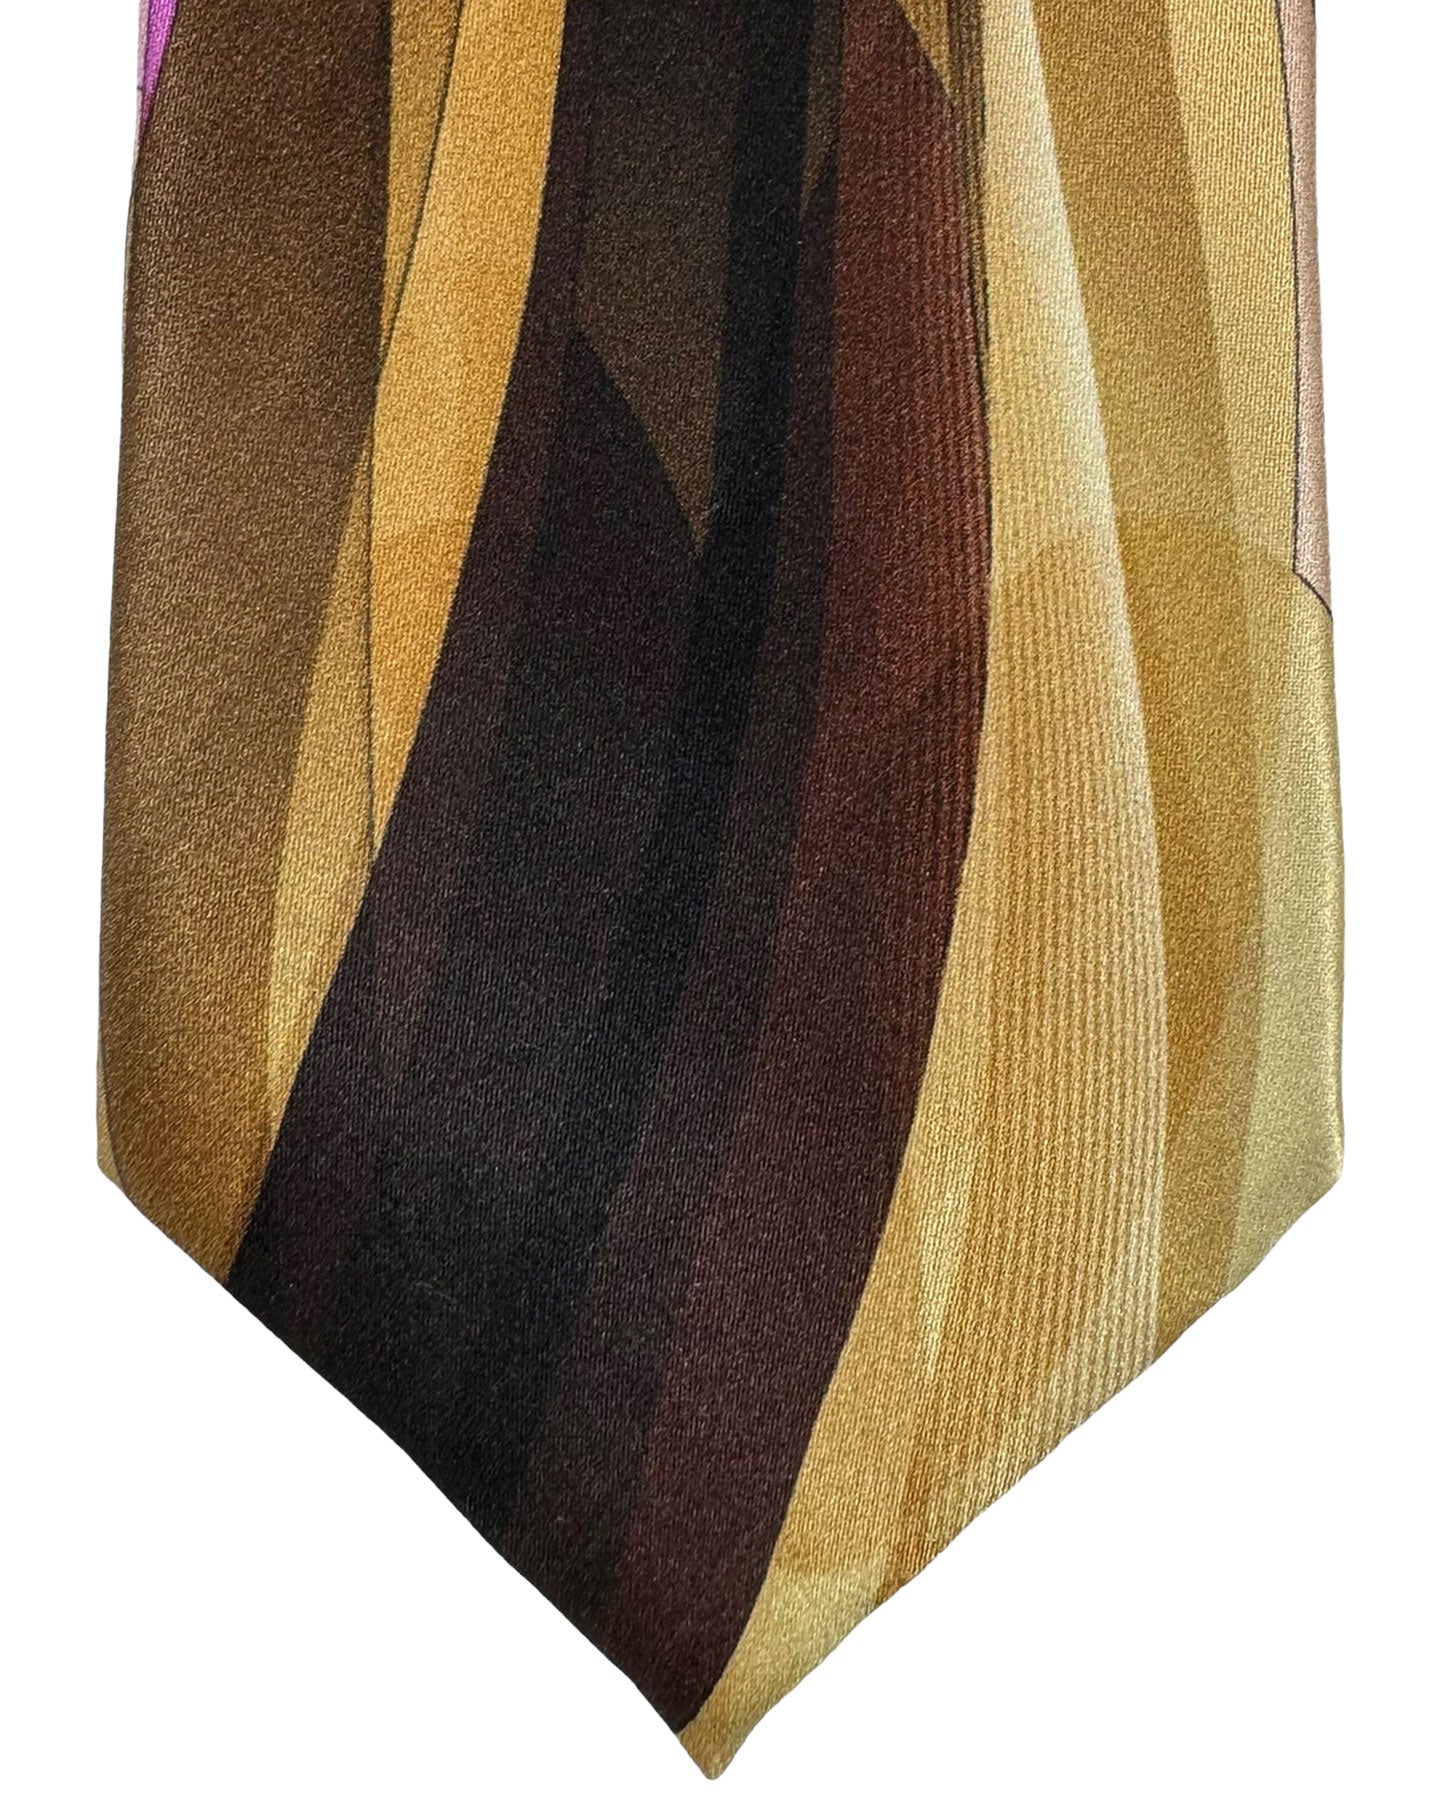 Vitaliano Pancaldi Silk Tie Brown Cream Swirl Design